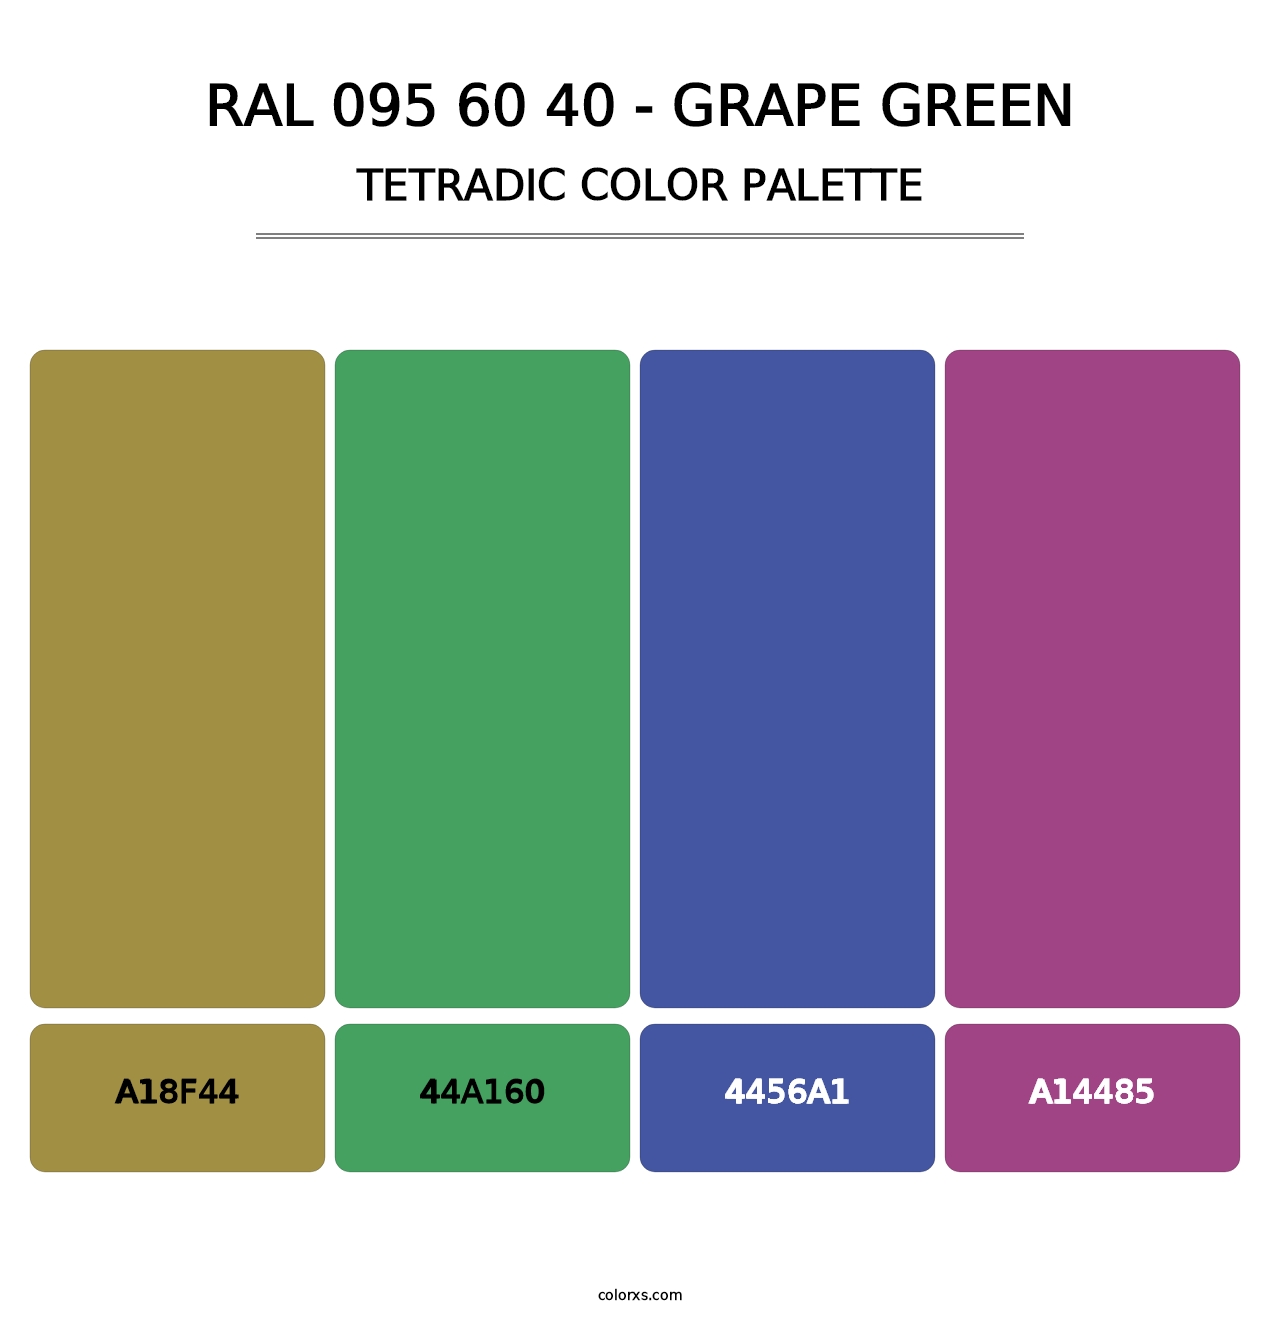 RAL 095 60 40 - Grape Green - Tetradic Color Palette